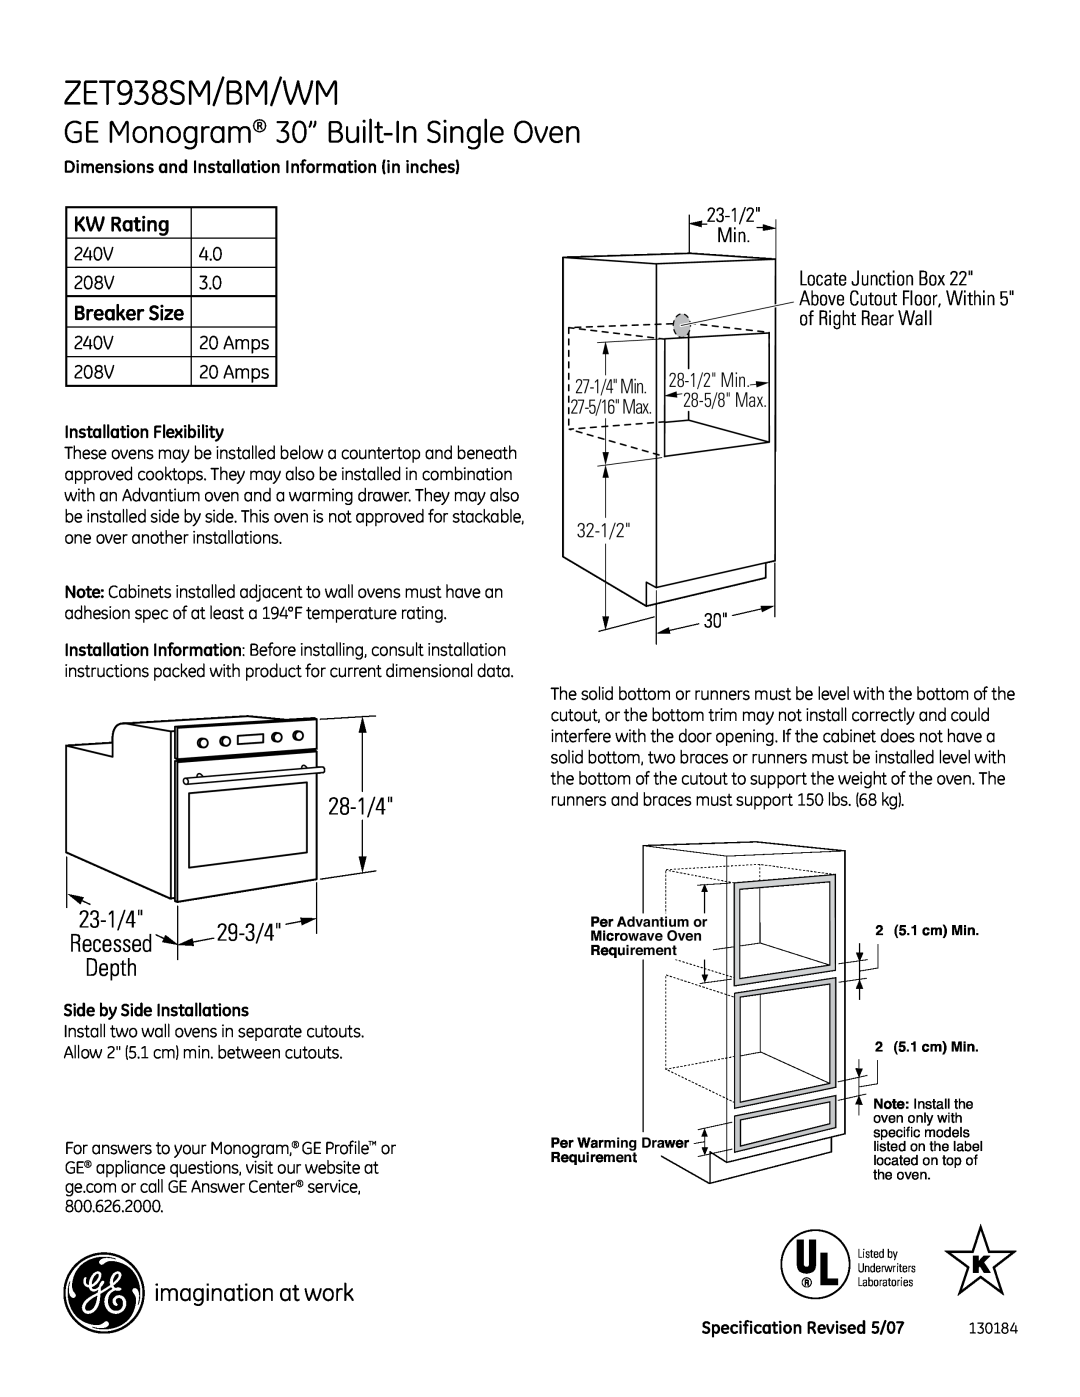 GE installation instructions ZET938SM/BM/WM, GE Monogram 30” Built-InSingle Oven, 28-1/4, 23-1/4 29-3/4Recessed Depth 